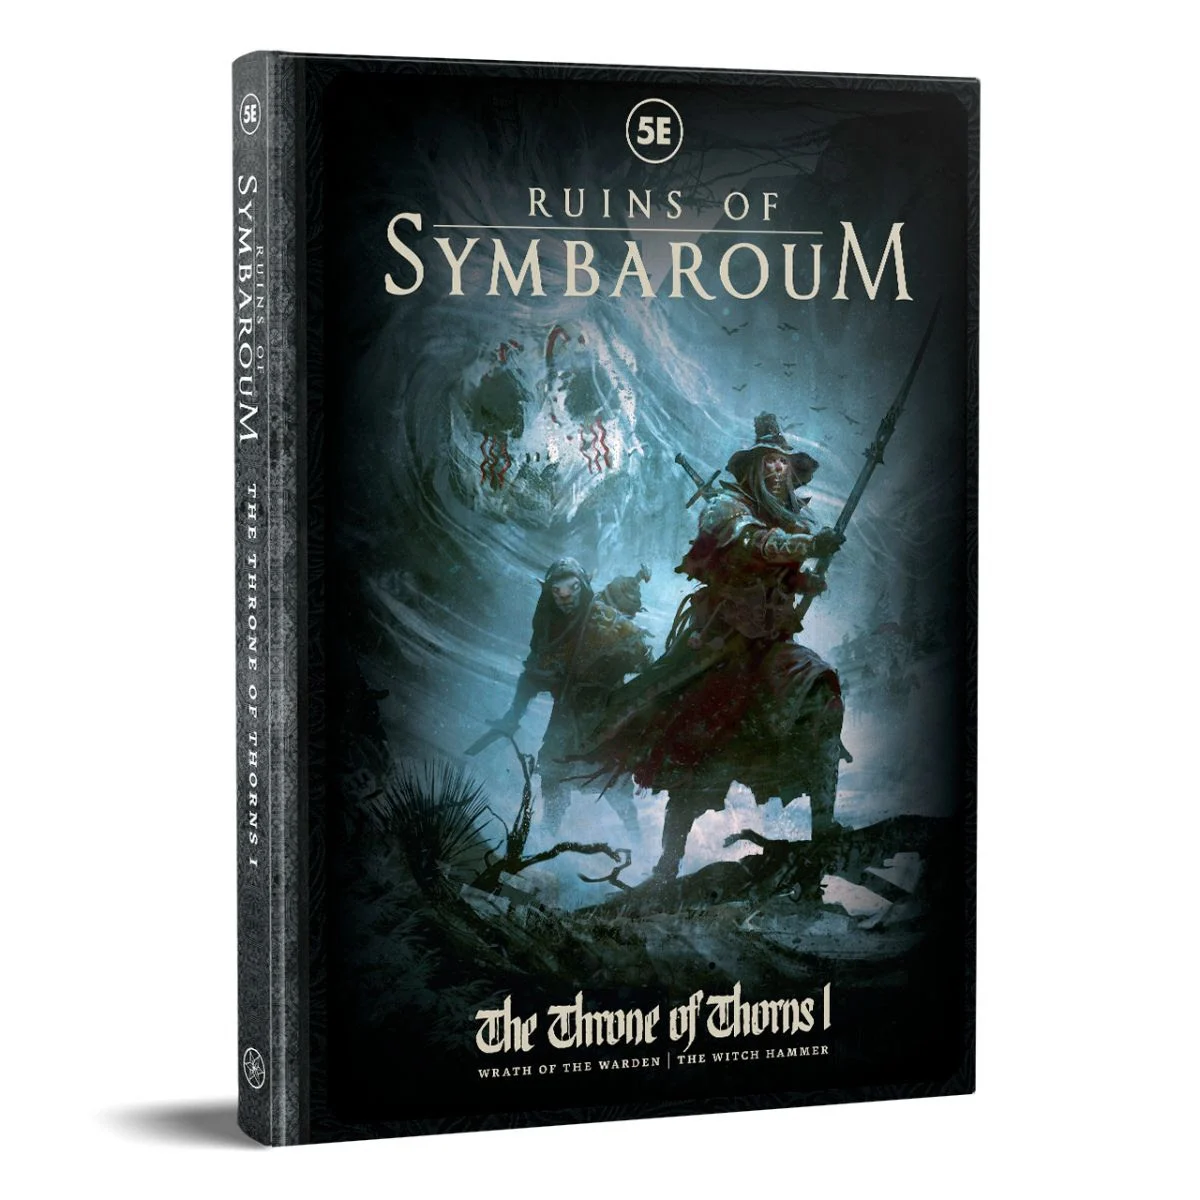 Symabroum RPG

